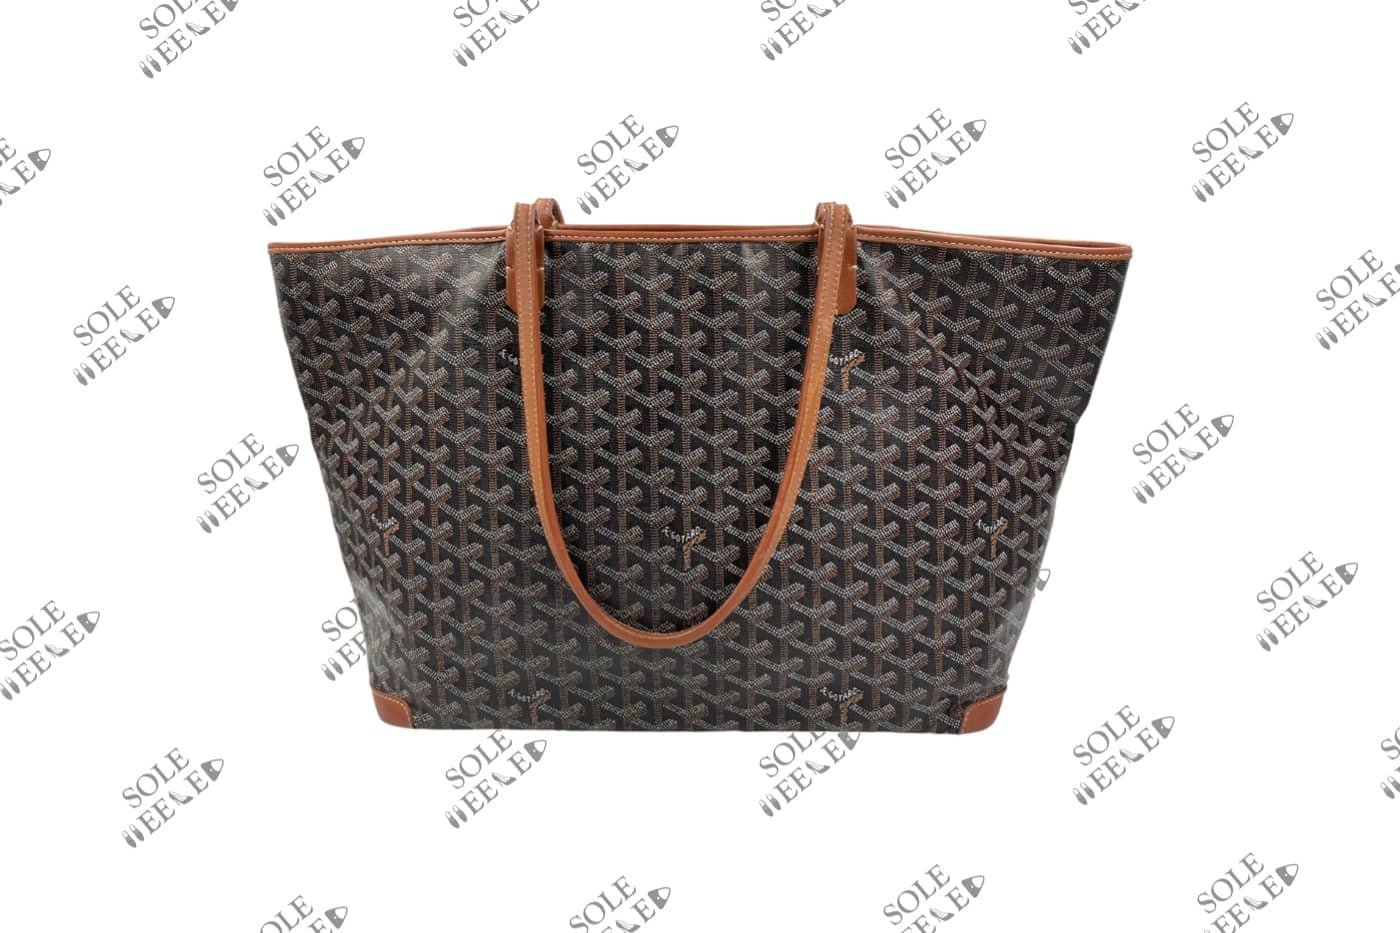 Goyard Leather Tote Bags